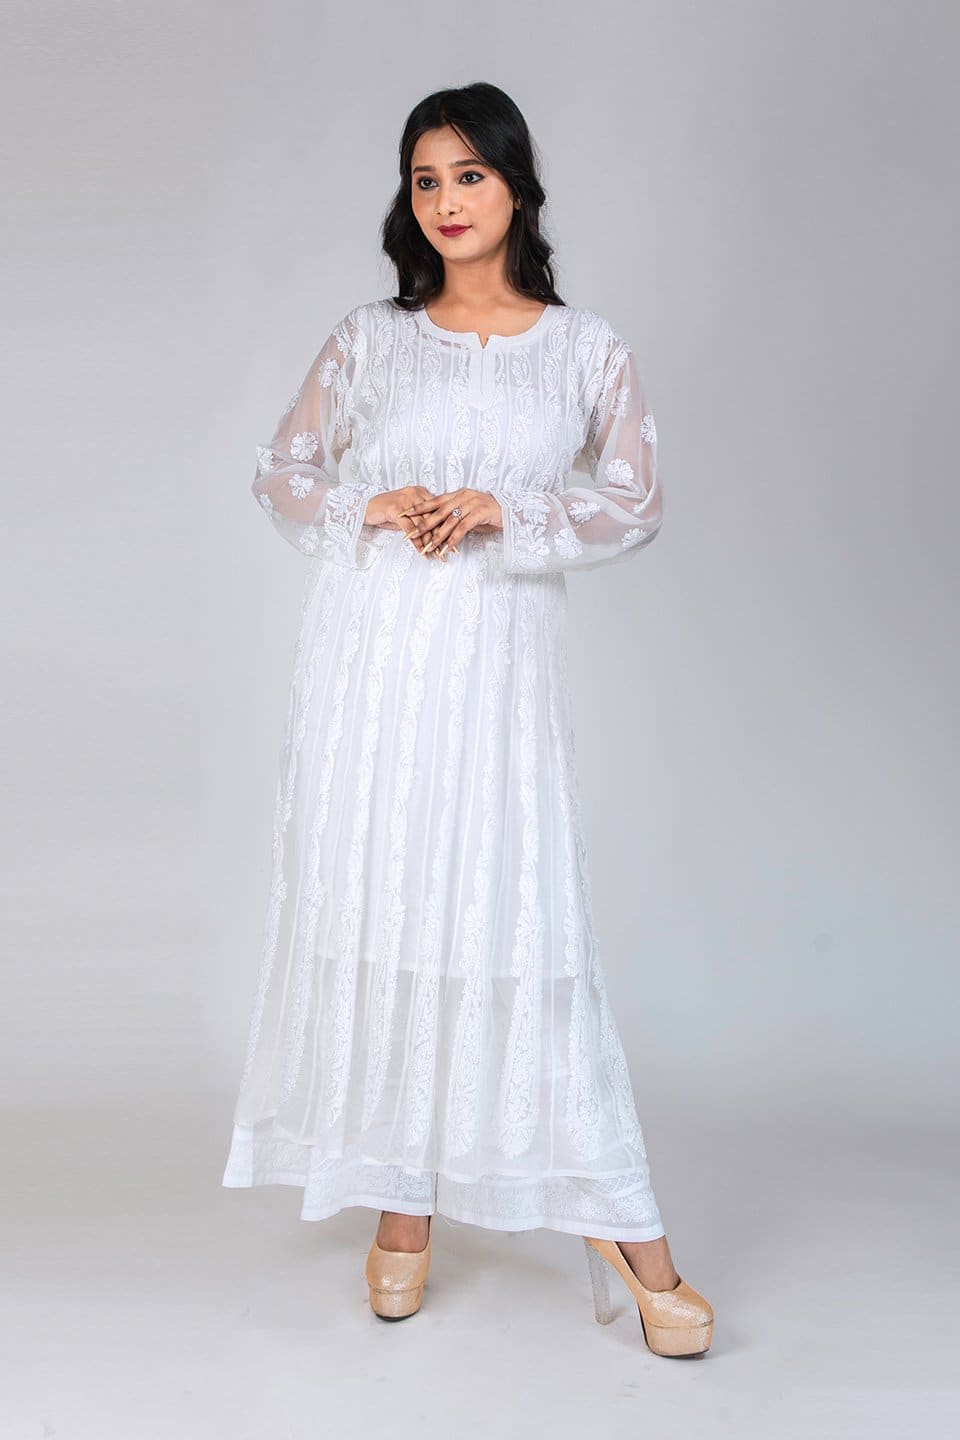 Exclusive Lucknowi chikankari 56 kali anarkali frock | Fashion week  dresses, Beautiful pakistani dresses, Designer saree blouse patterns